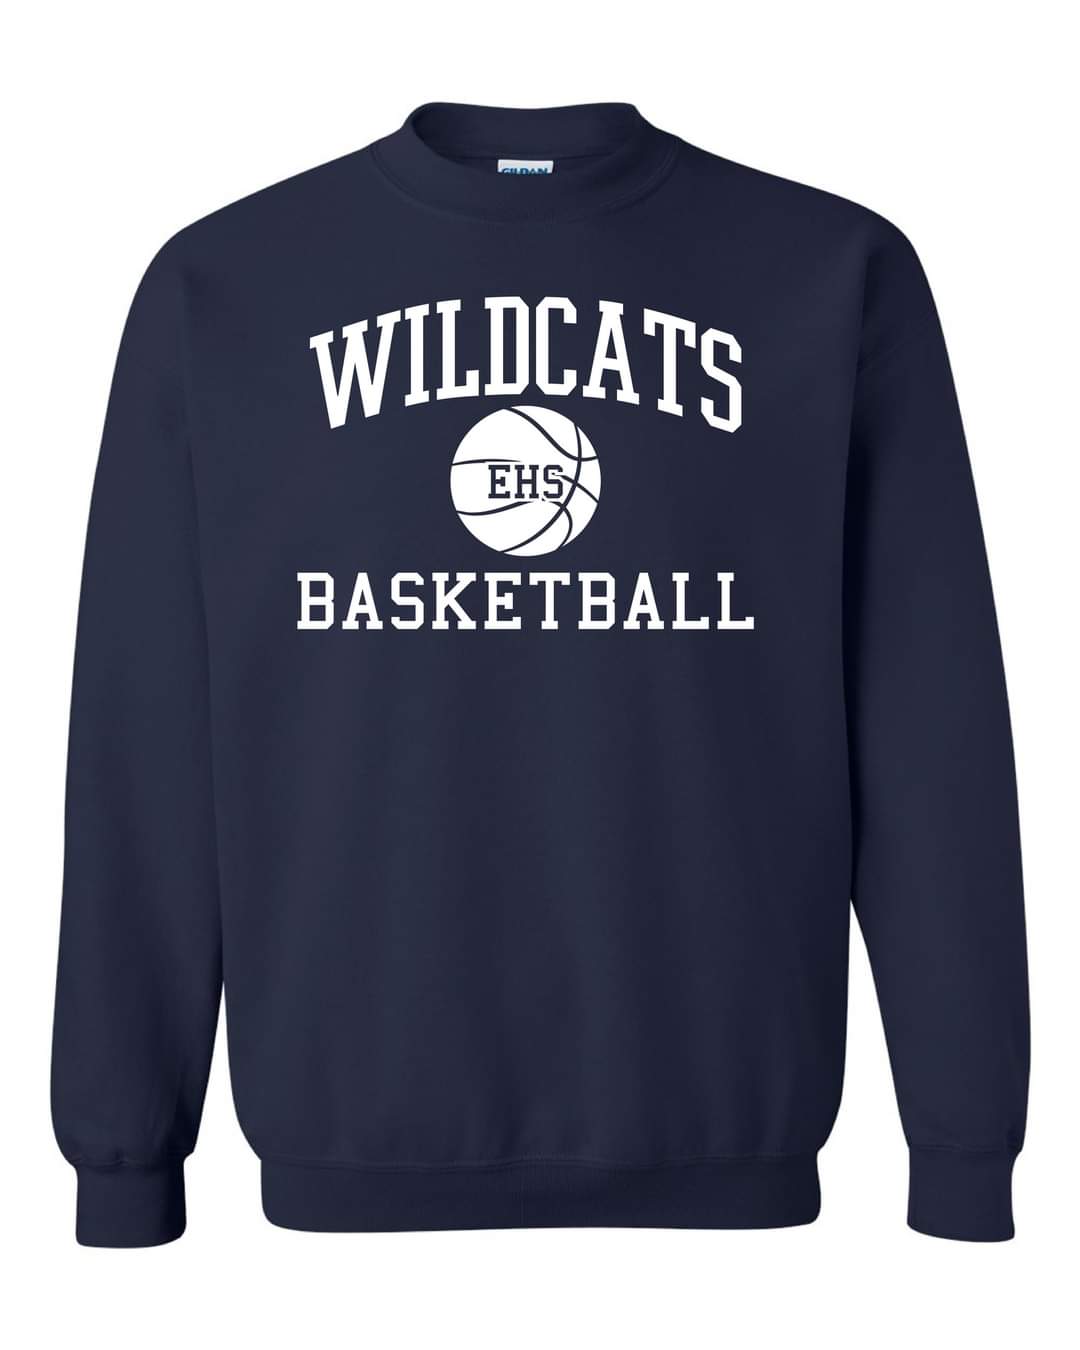 Wildcat Basketball Sweatshirt